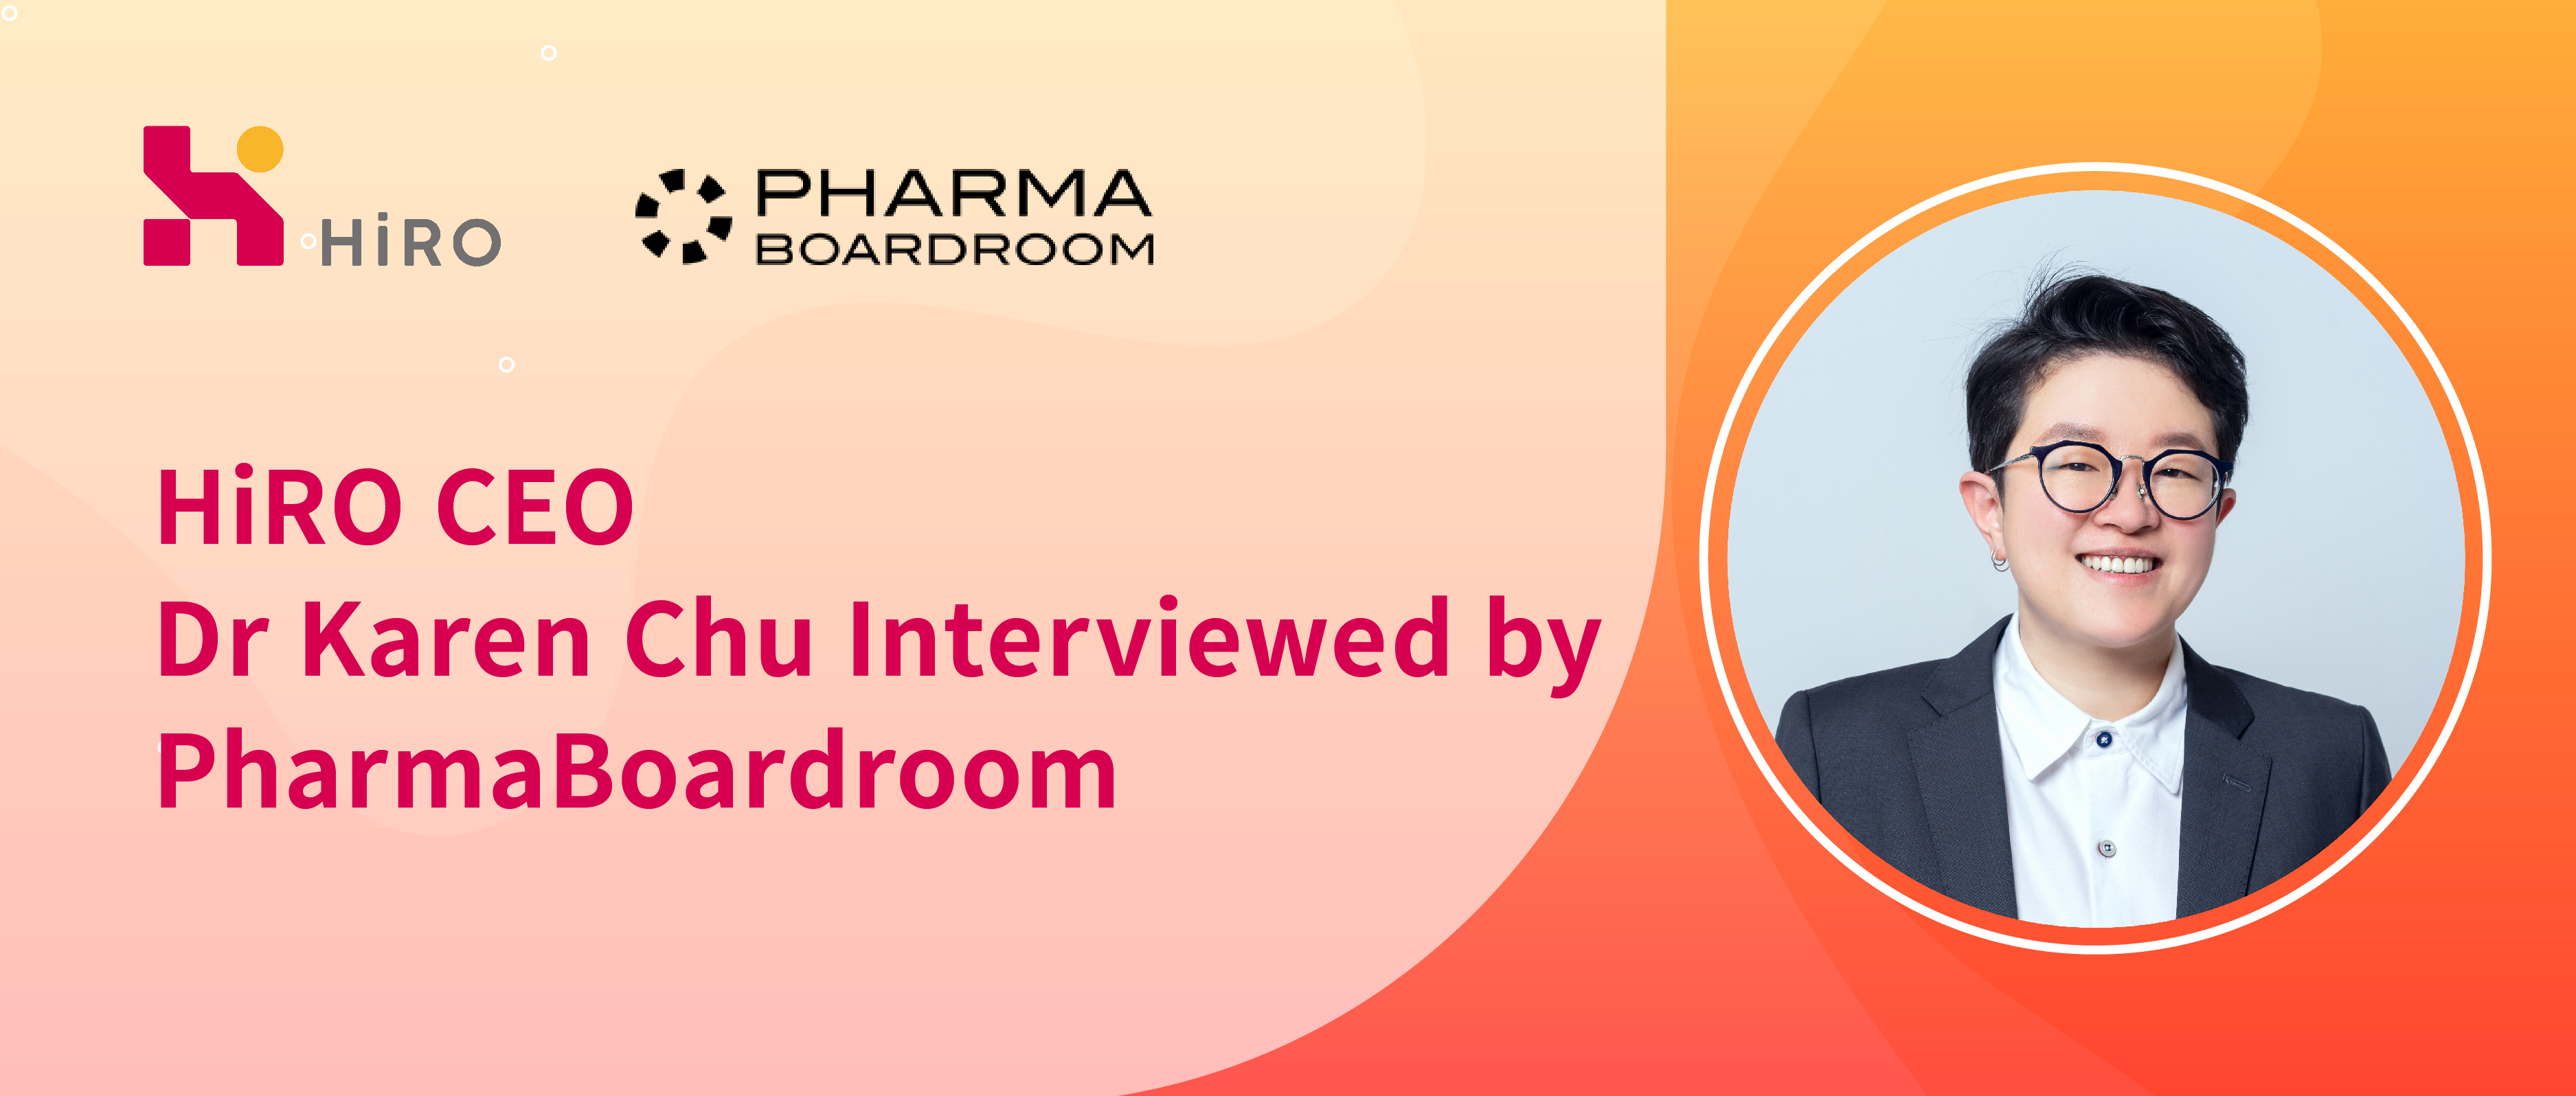 HiRO CEO Dr Karen Chu Interviewed by PharmaBoardroom